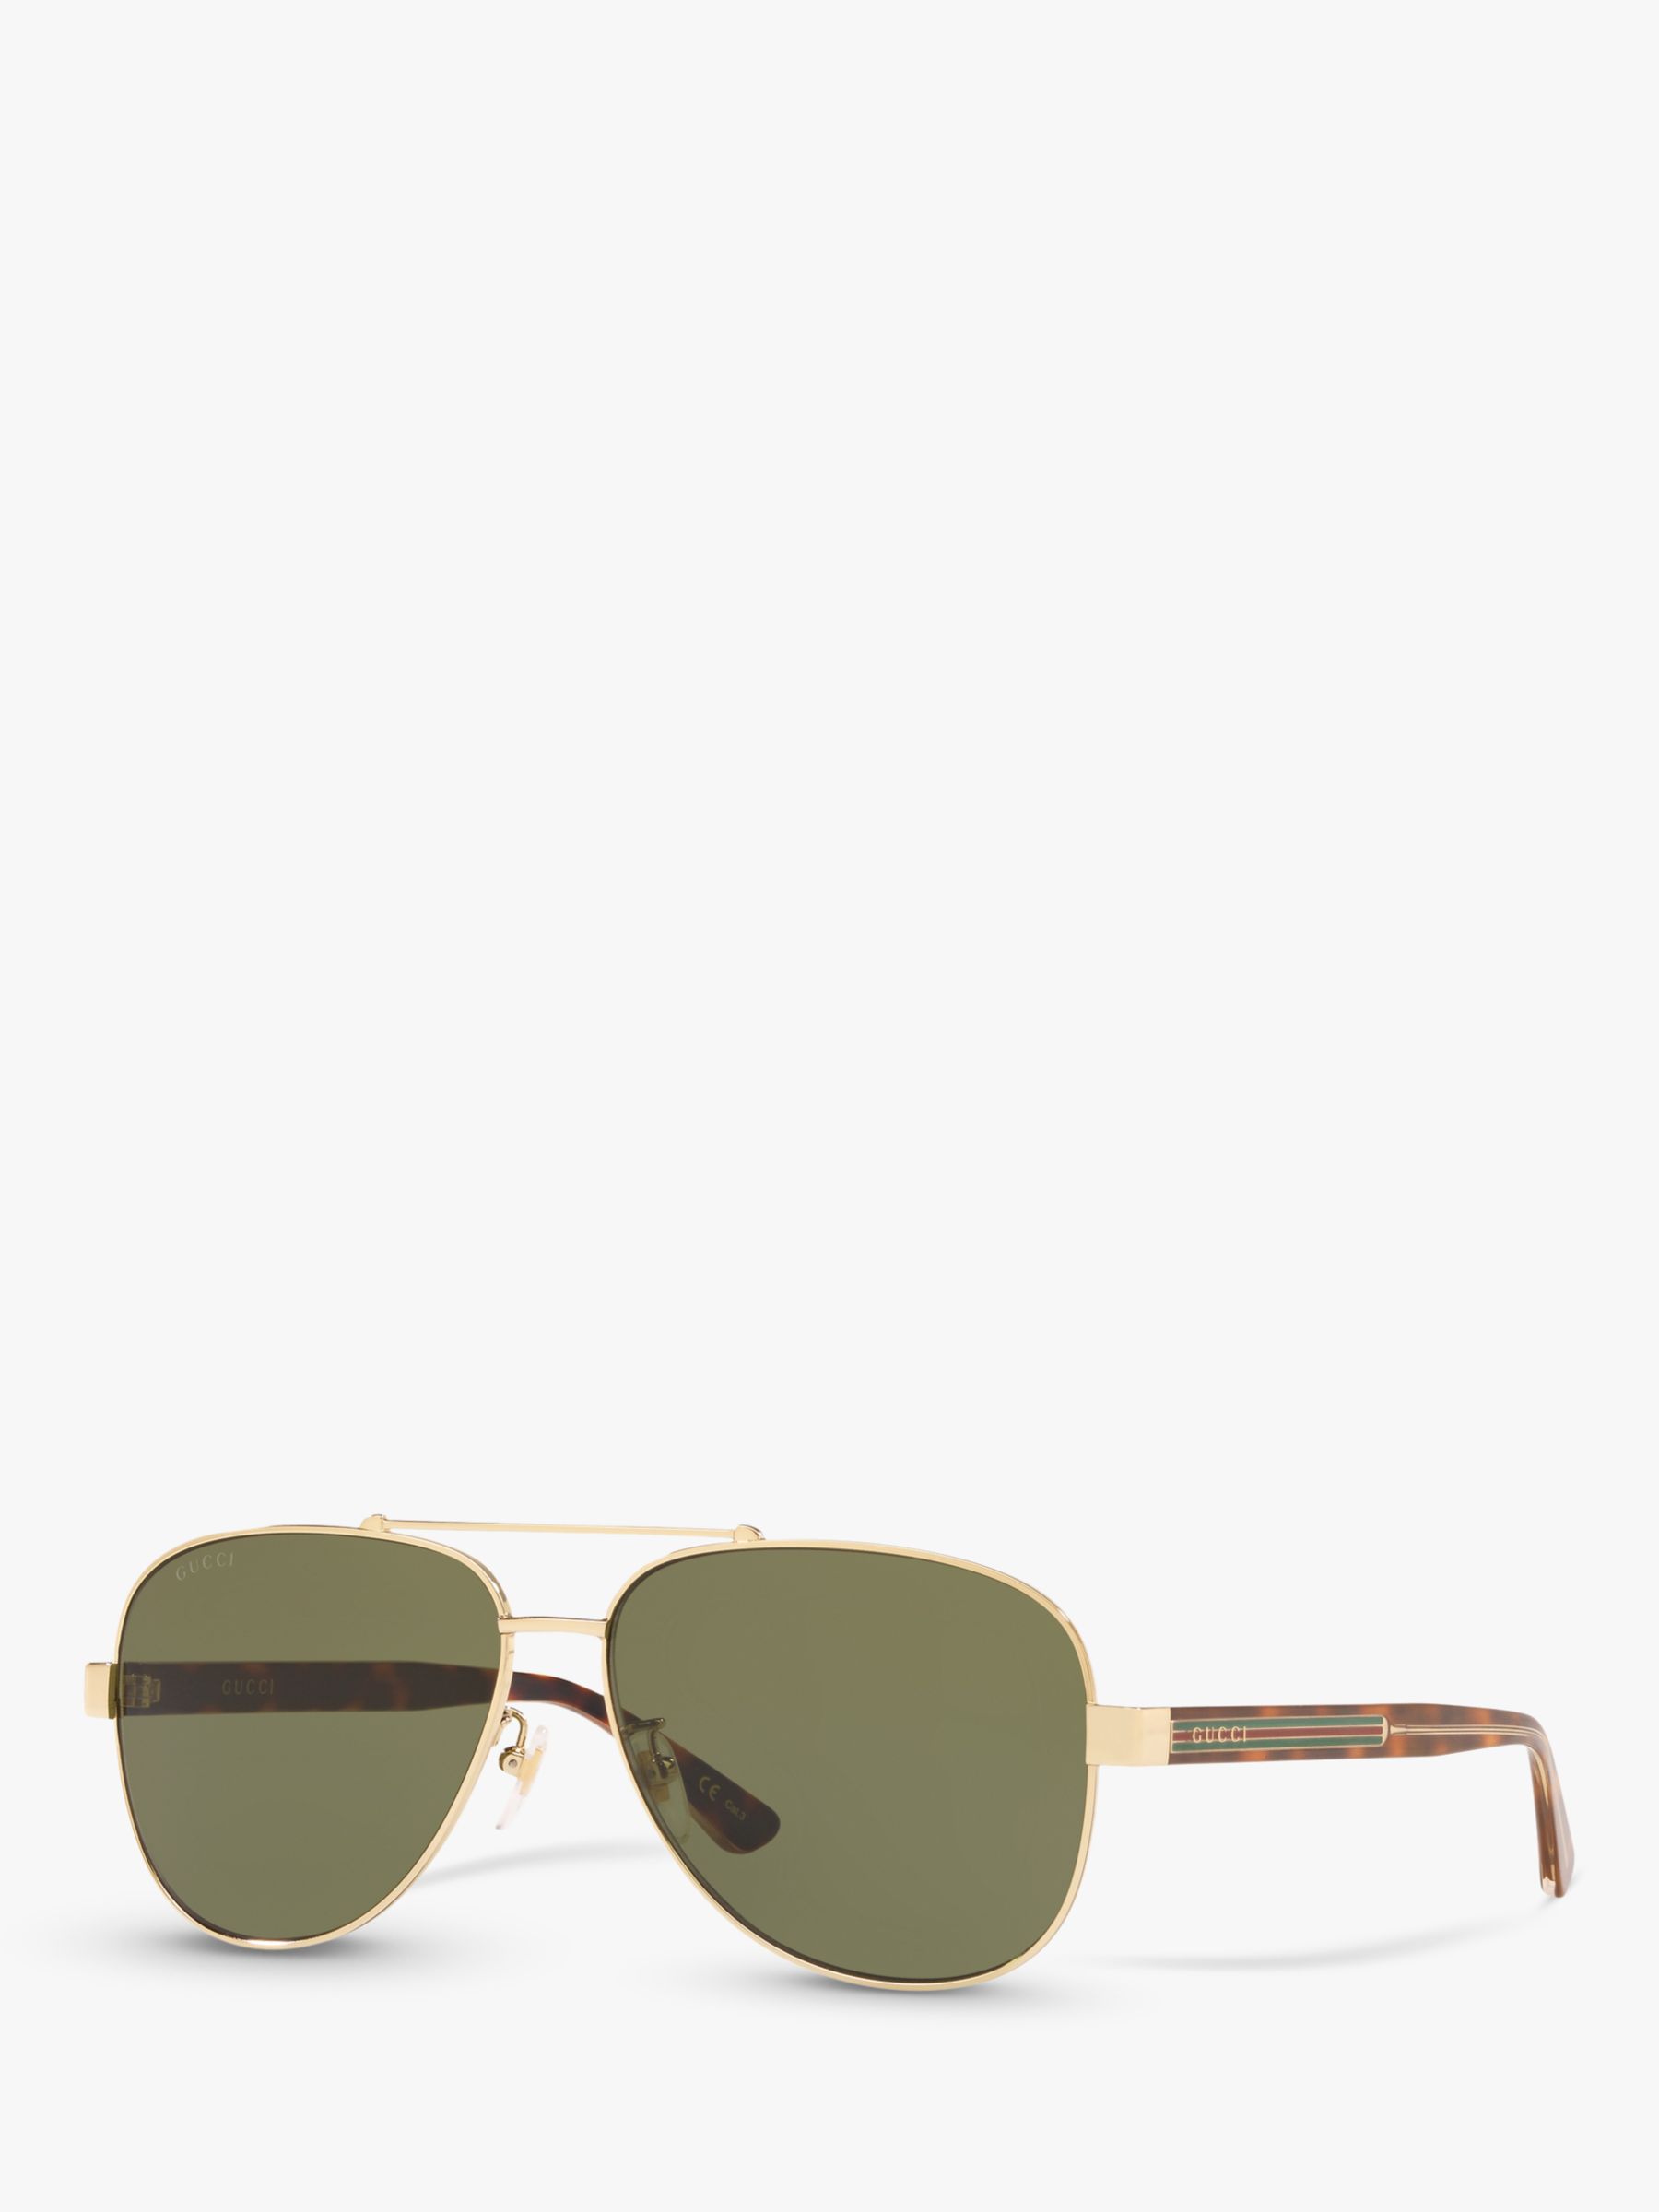 Gucci GC001244 Men's Aviator Sunglasses, Gold/Green at John Lewis u0026 Partners